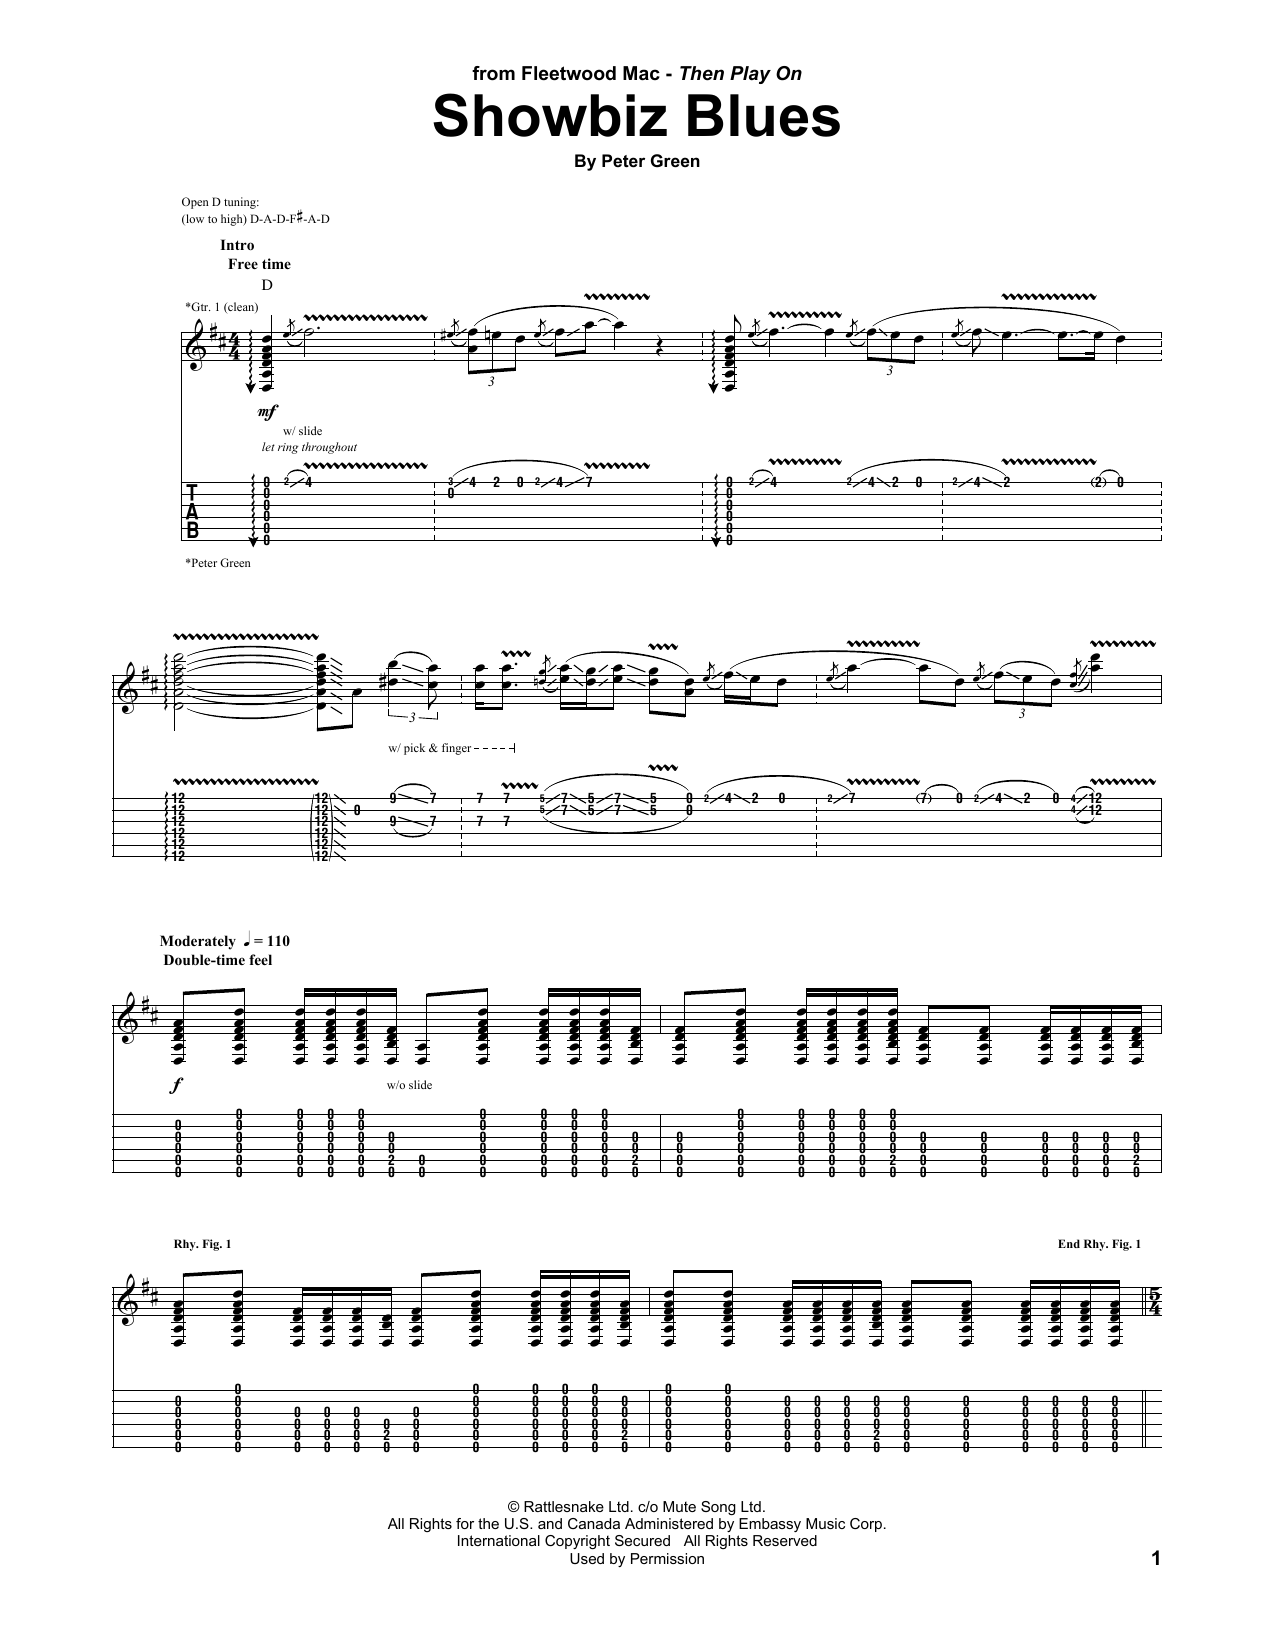 Fleetwood Mac Showbiz Blues Sheet Music Notes & Chords for Guitar Tab - Download or Print PDF